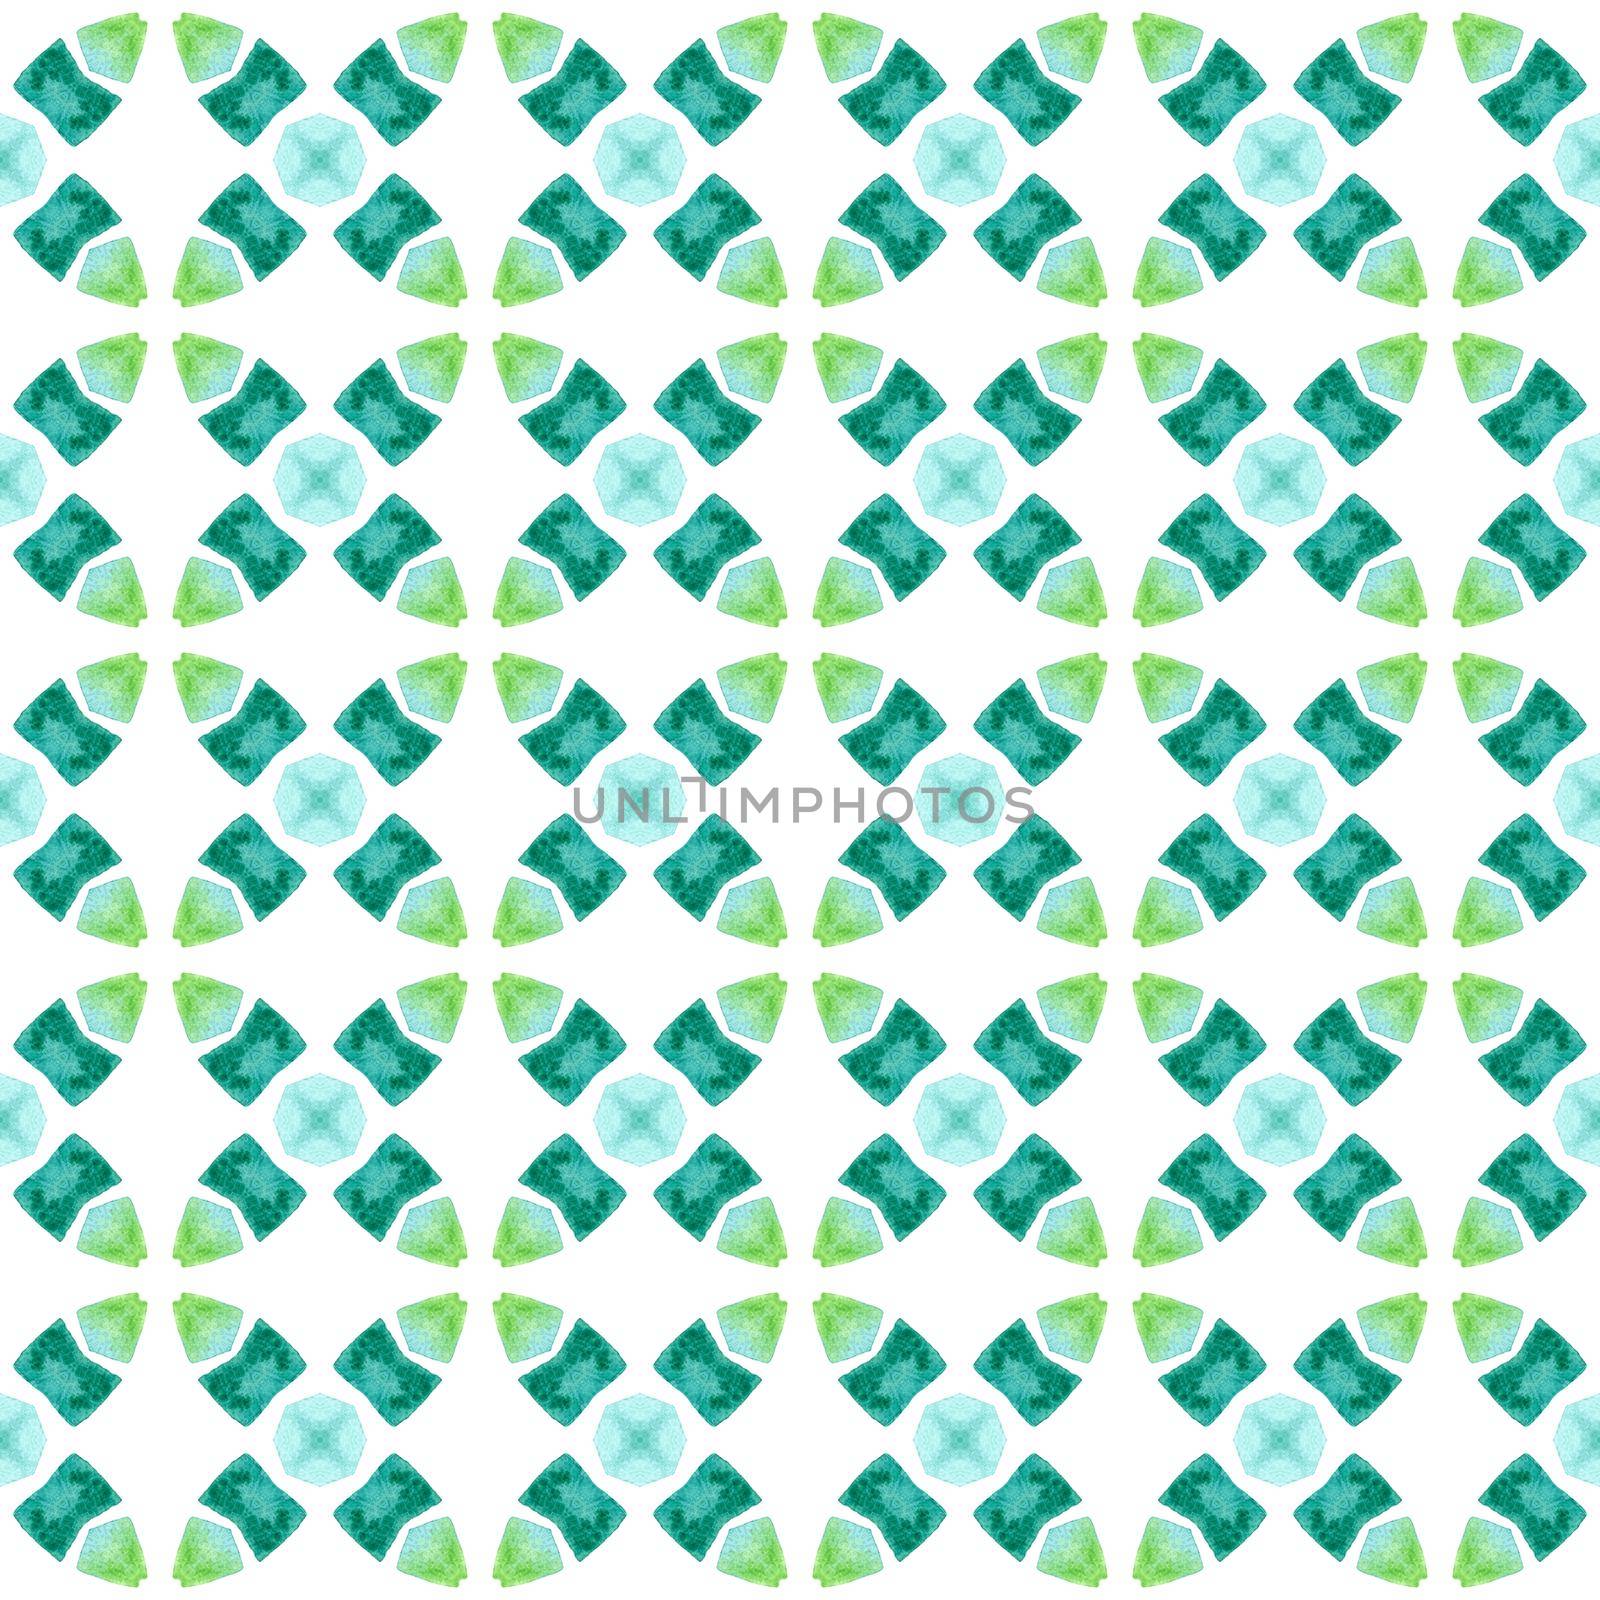 Trendy organic green border. Green great boho chic summer design. Textile ready surprising print, swimwear fabric, wallpaper, wrapping. Organic tile.